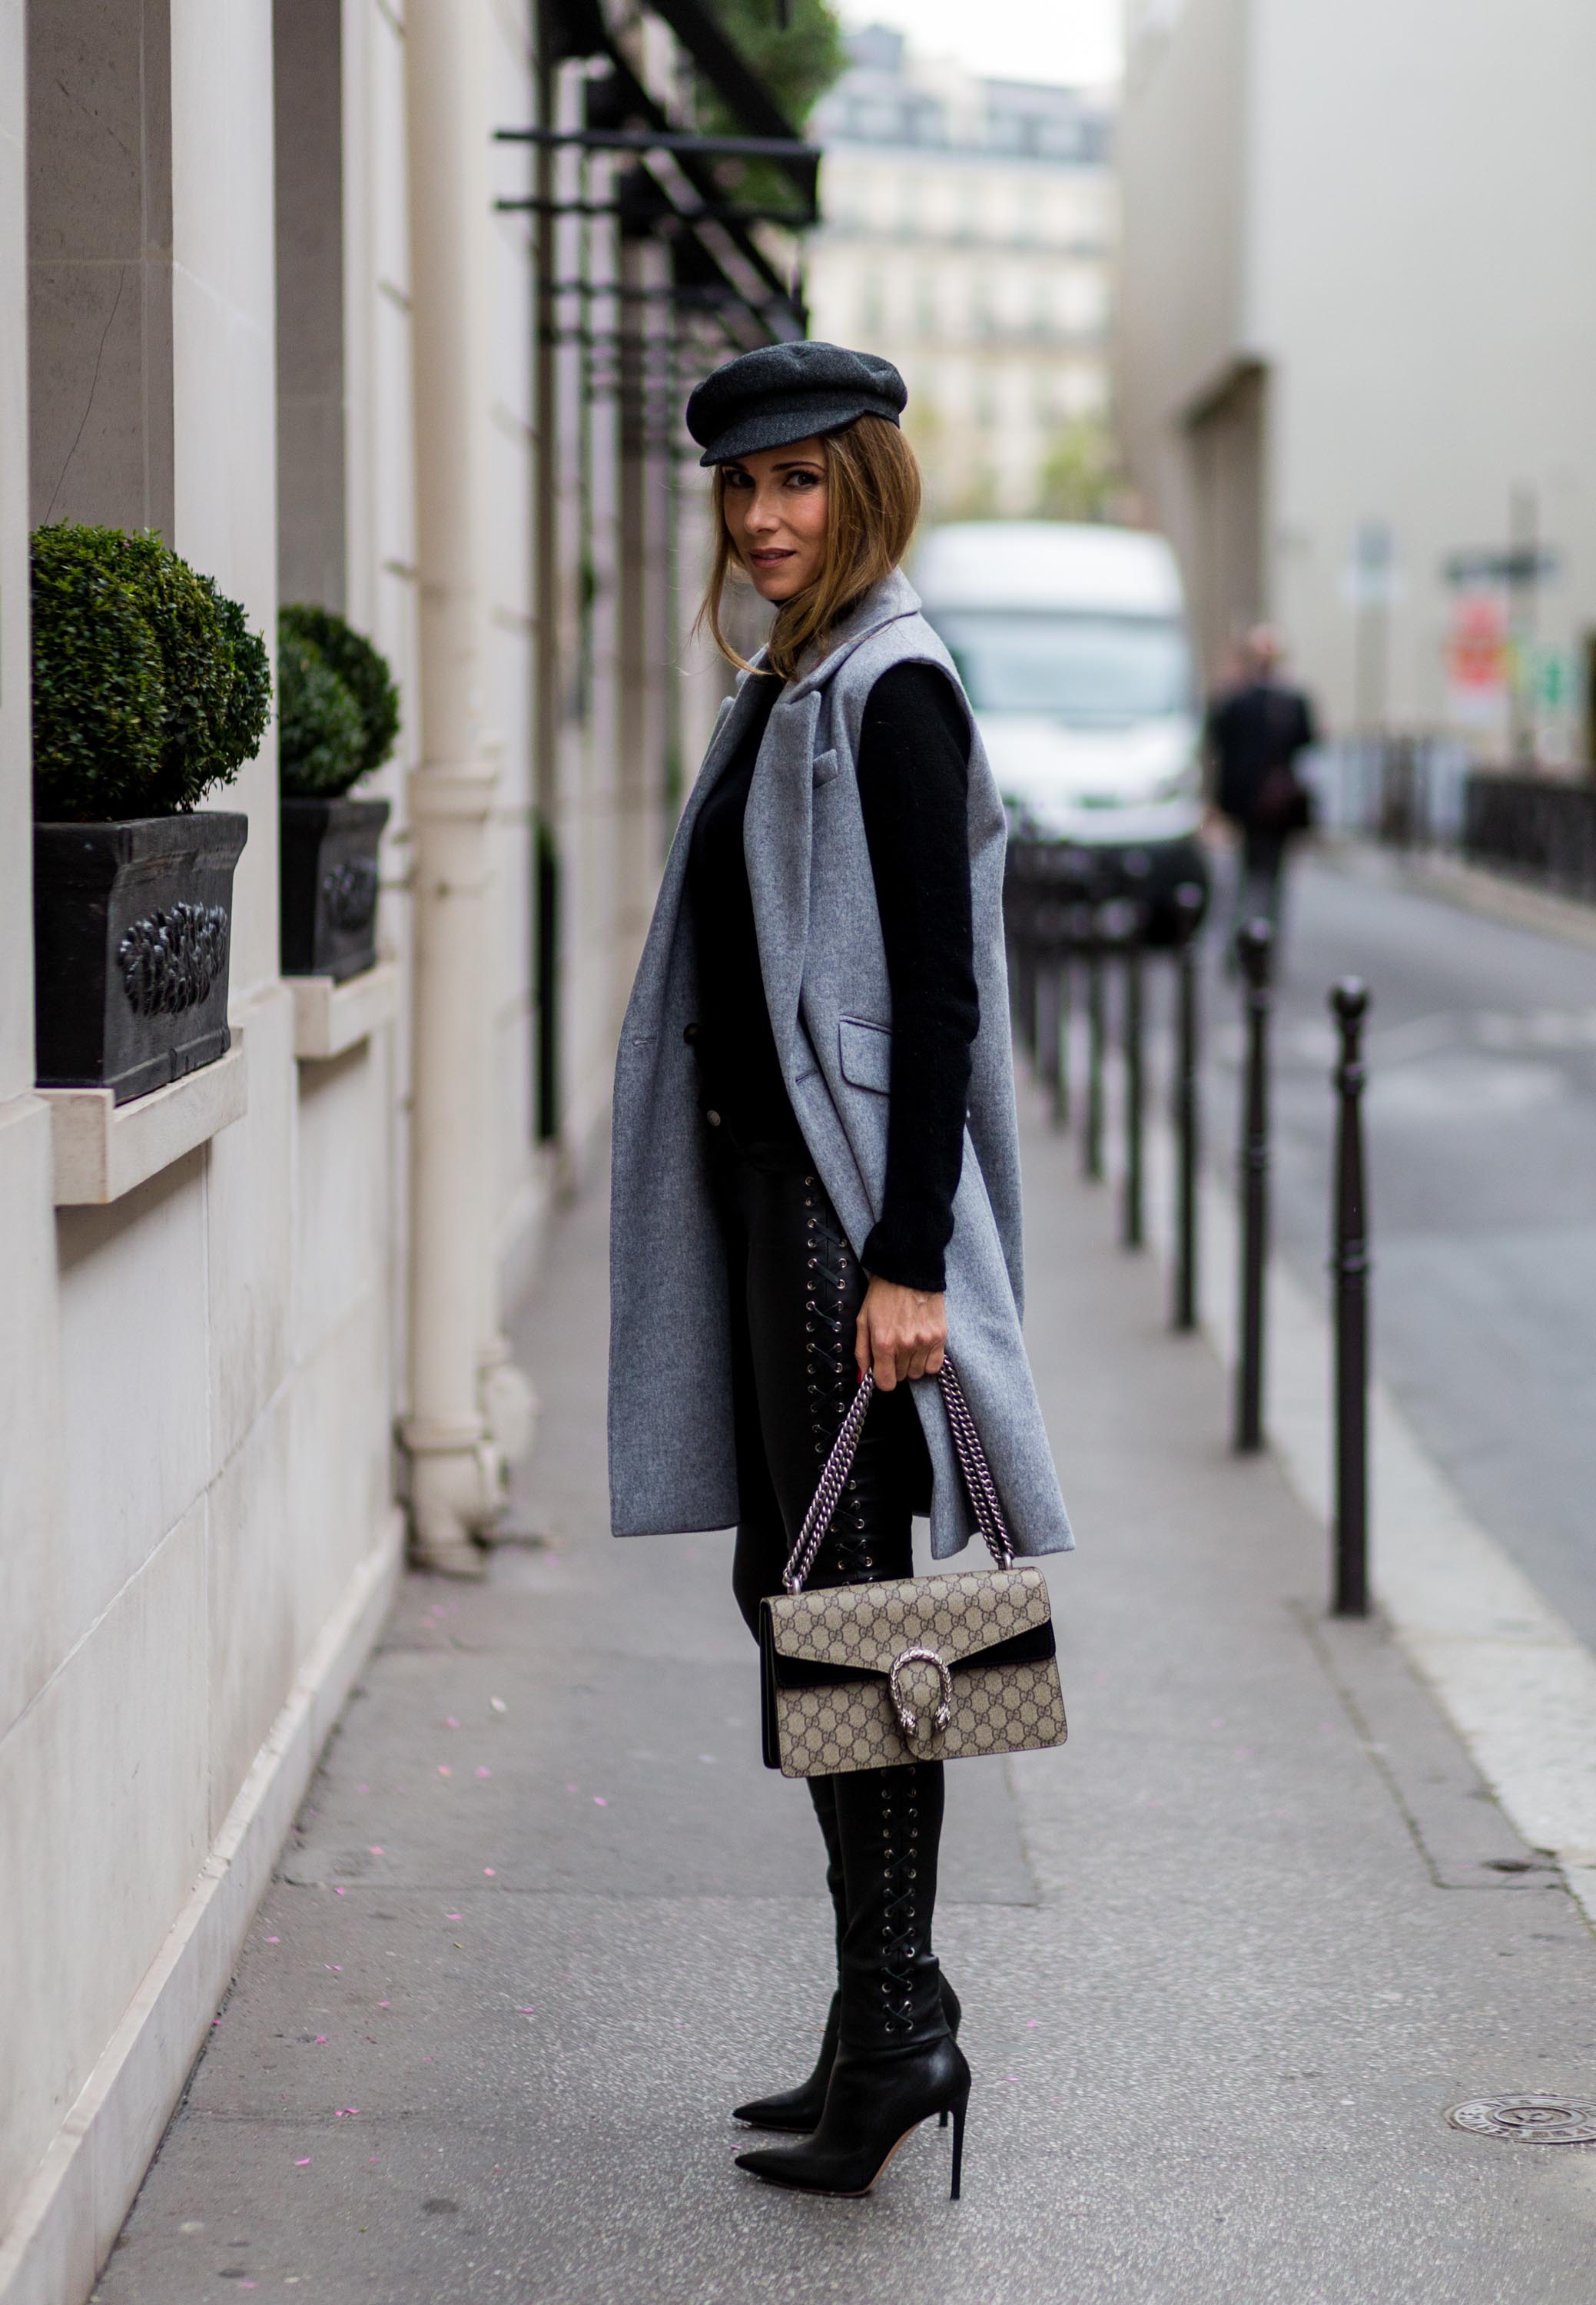 Alexandra Lapp at Paris Fashion Week #2